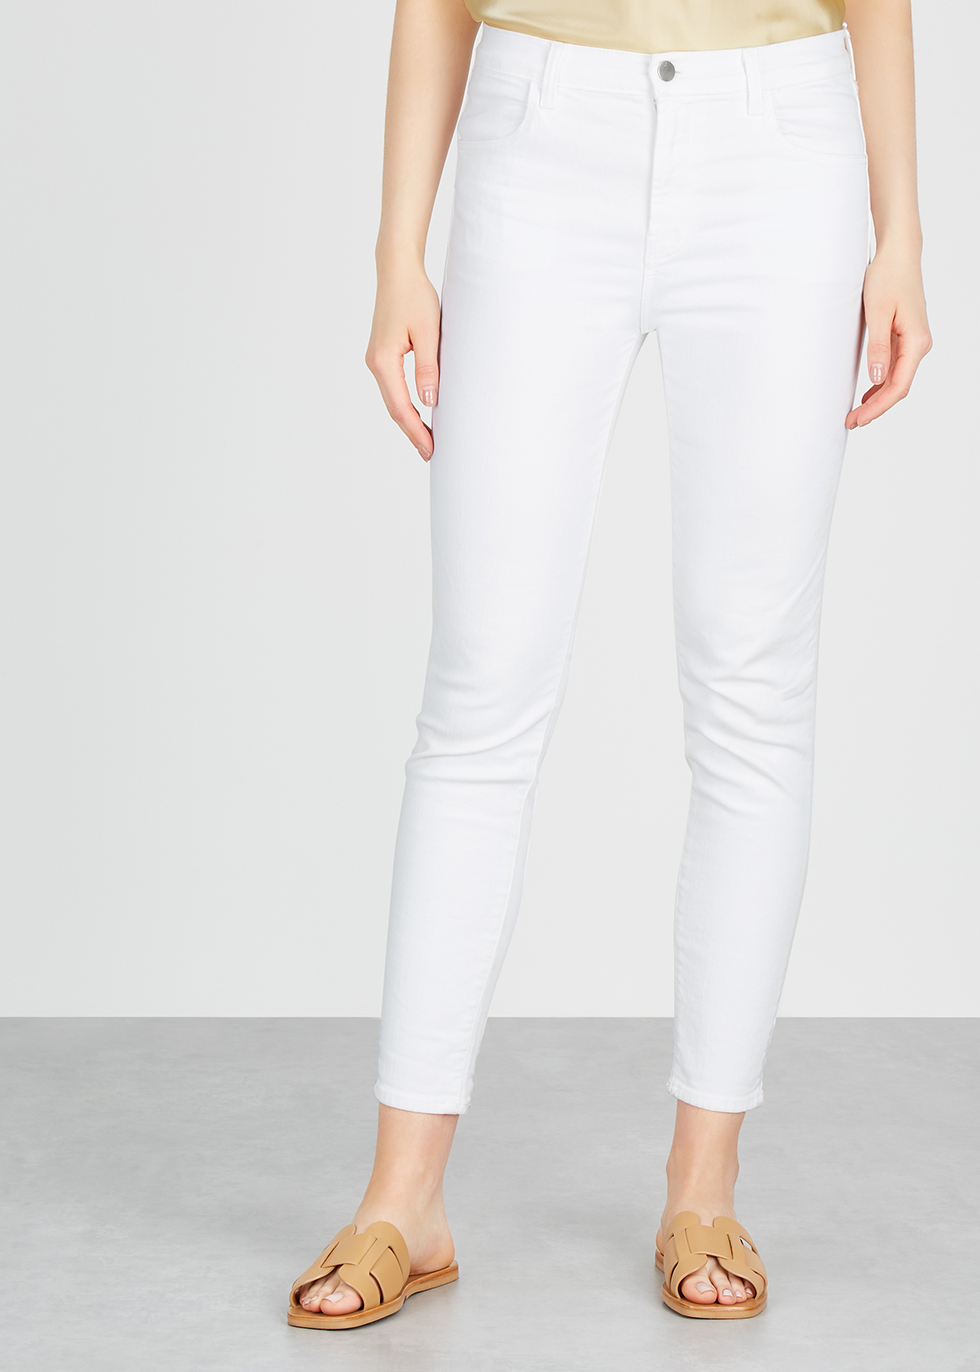 j brand white jeans